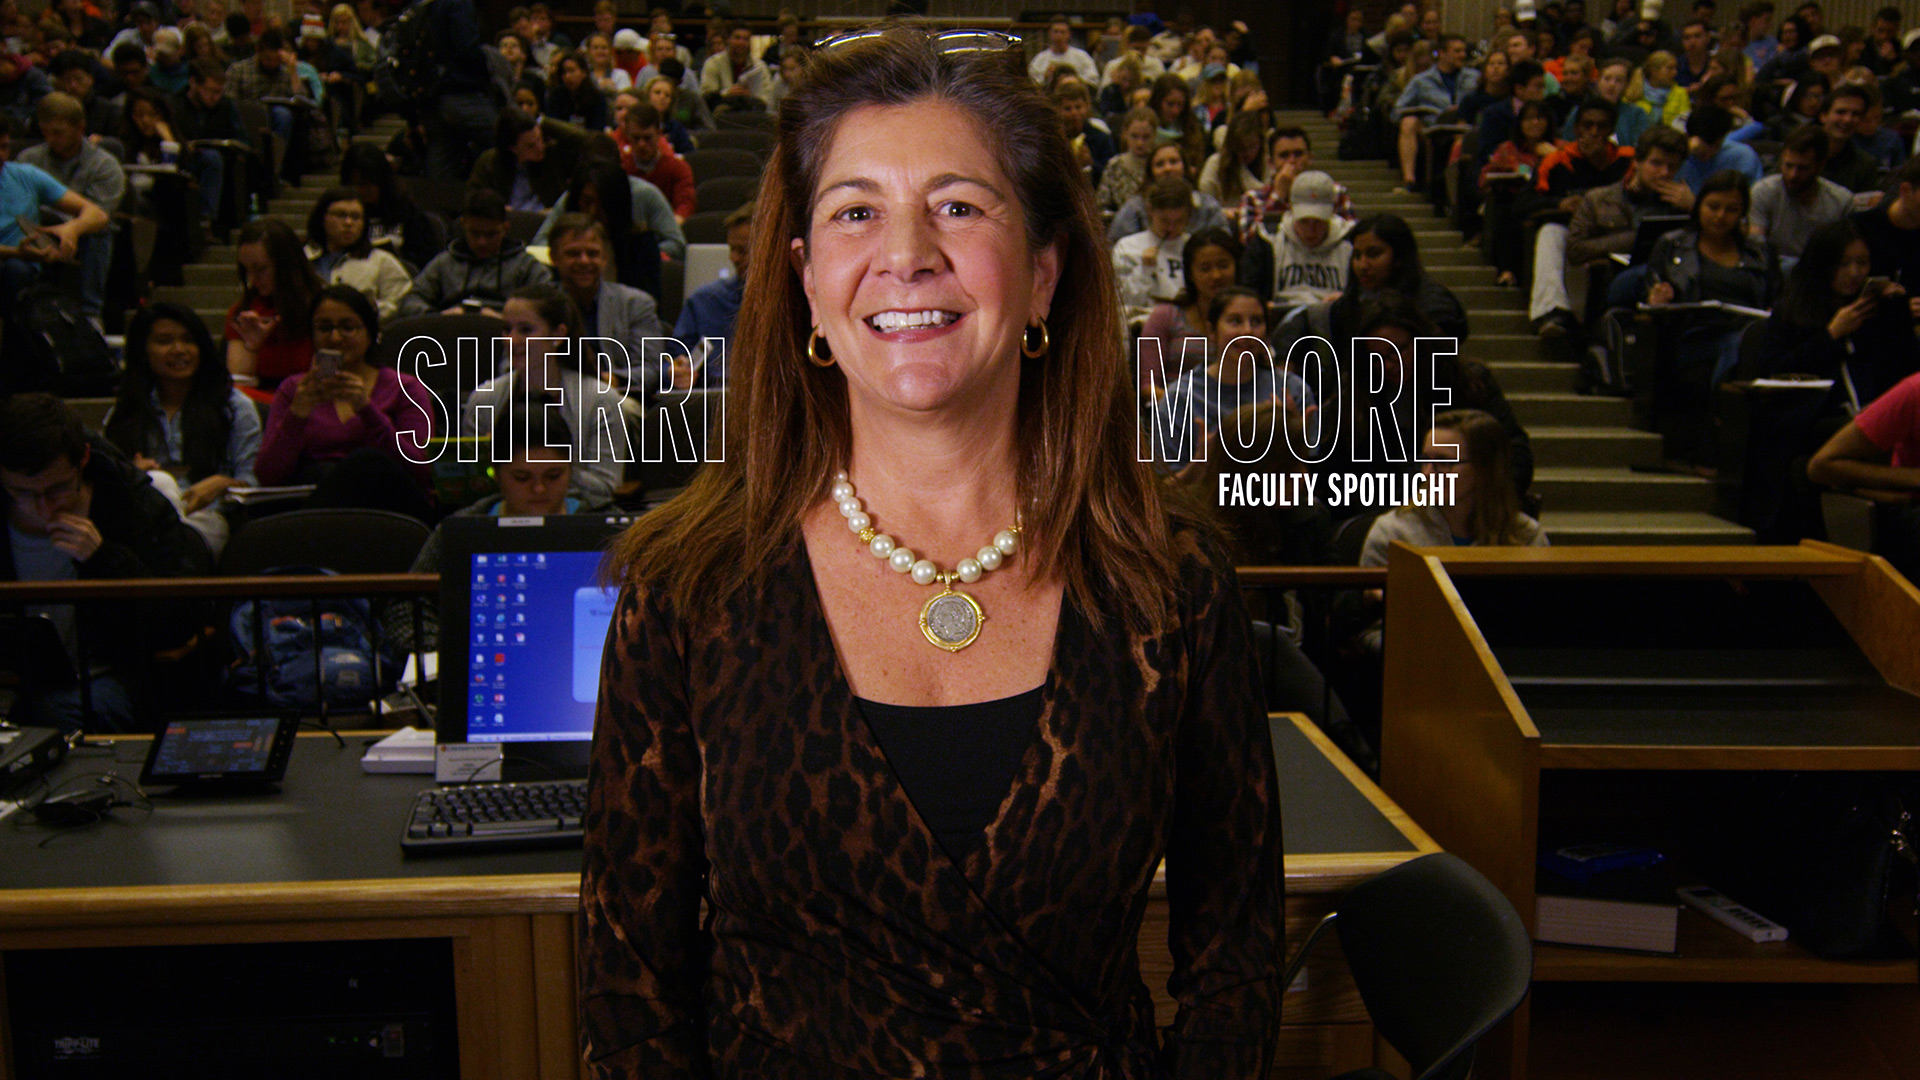 Sherri Moore headshot with the text Sherri Moore Faculty spotlight